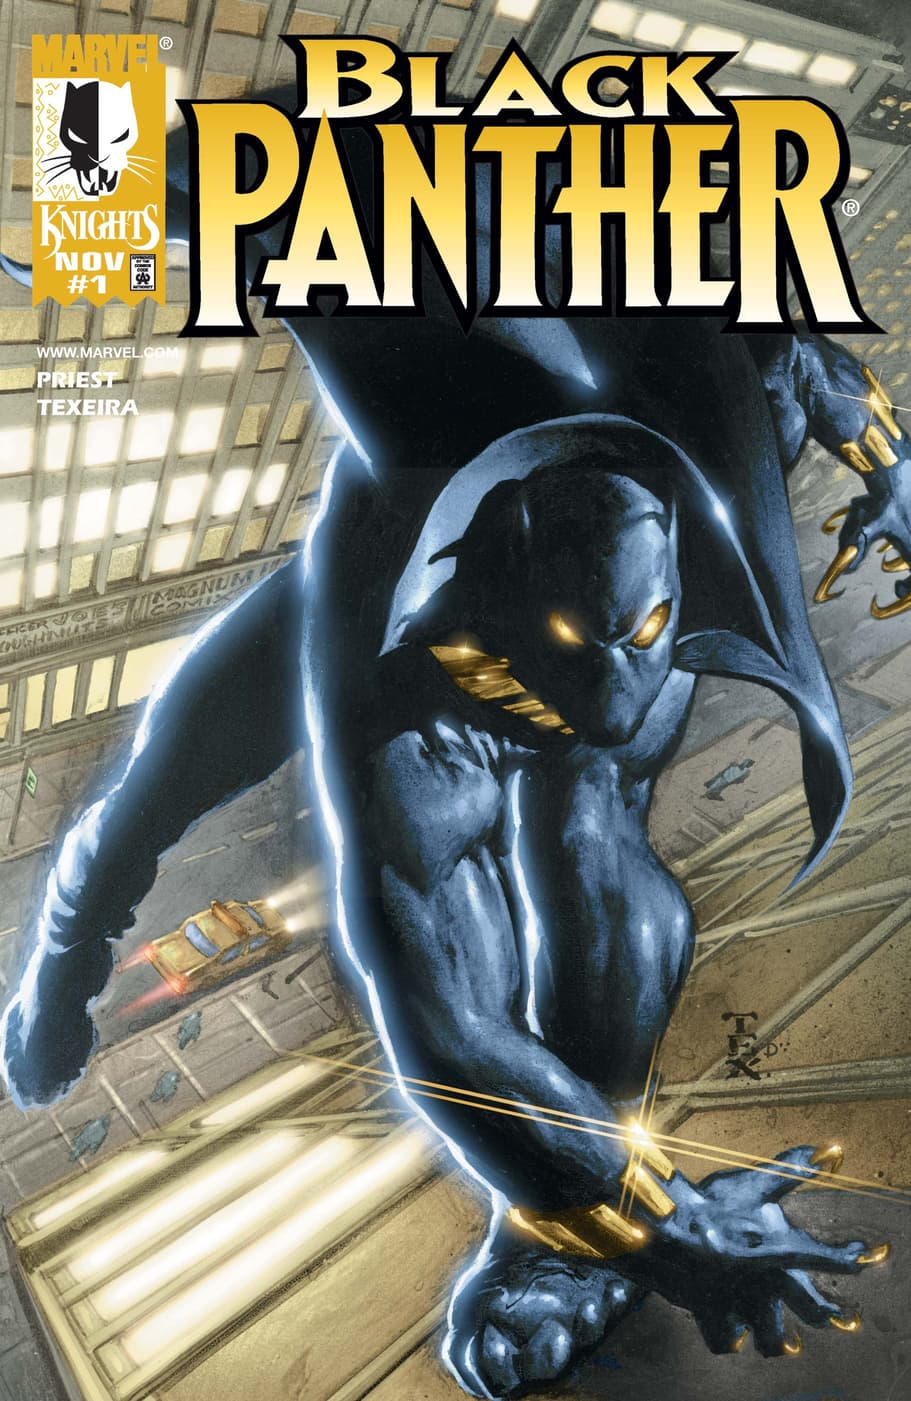 Marvel Knights Black Panther EIN HELD VIELE TEUFEL VARIANT Limitiert 250 PANINI 